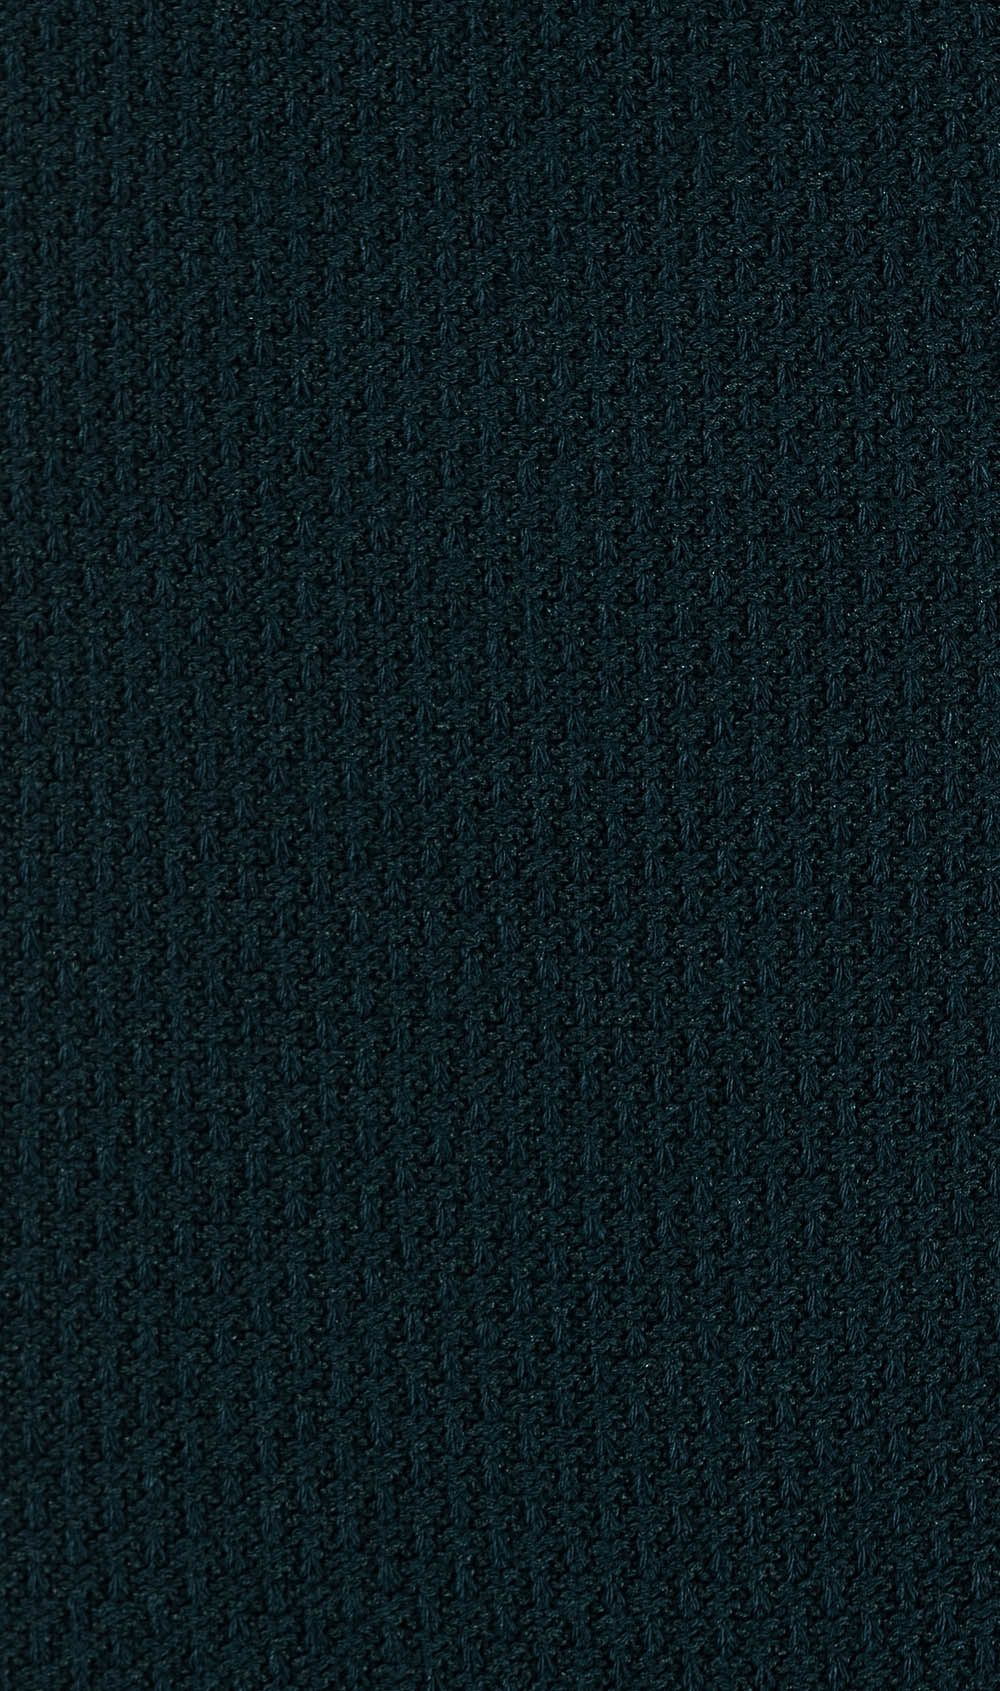 Dark Peacock Green Textured Socks Pattern